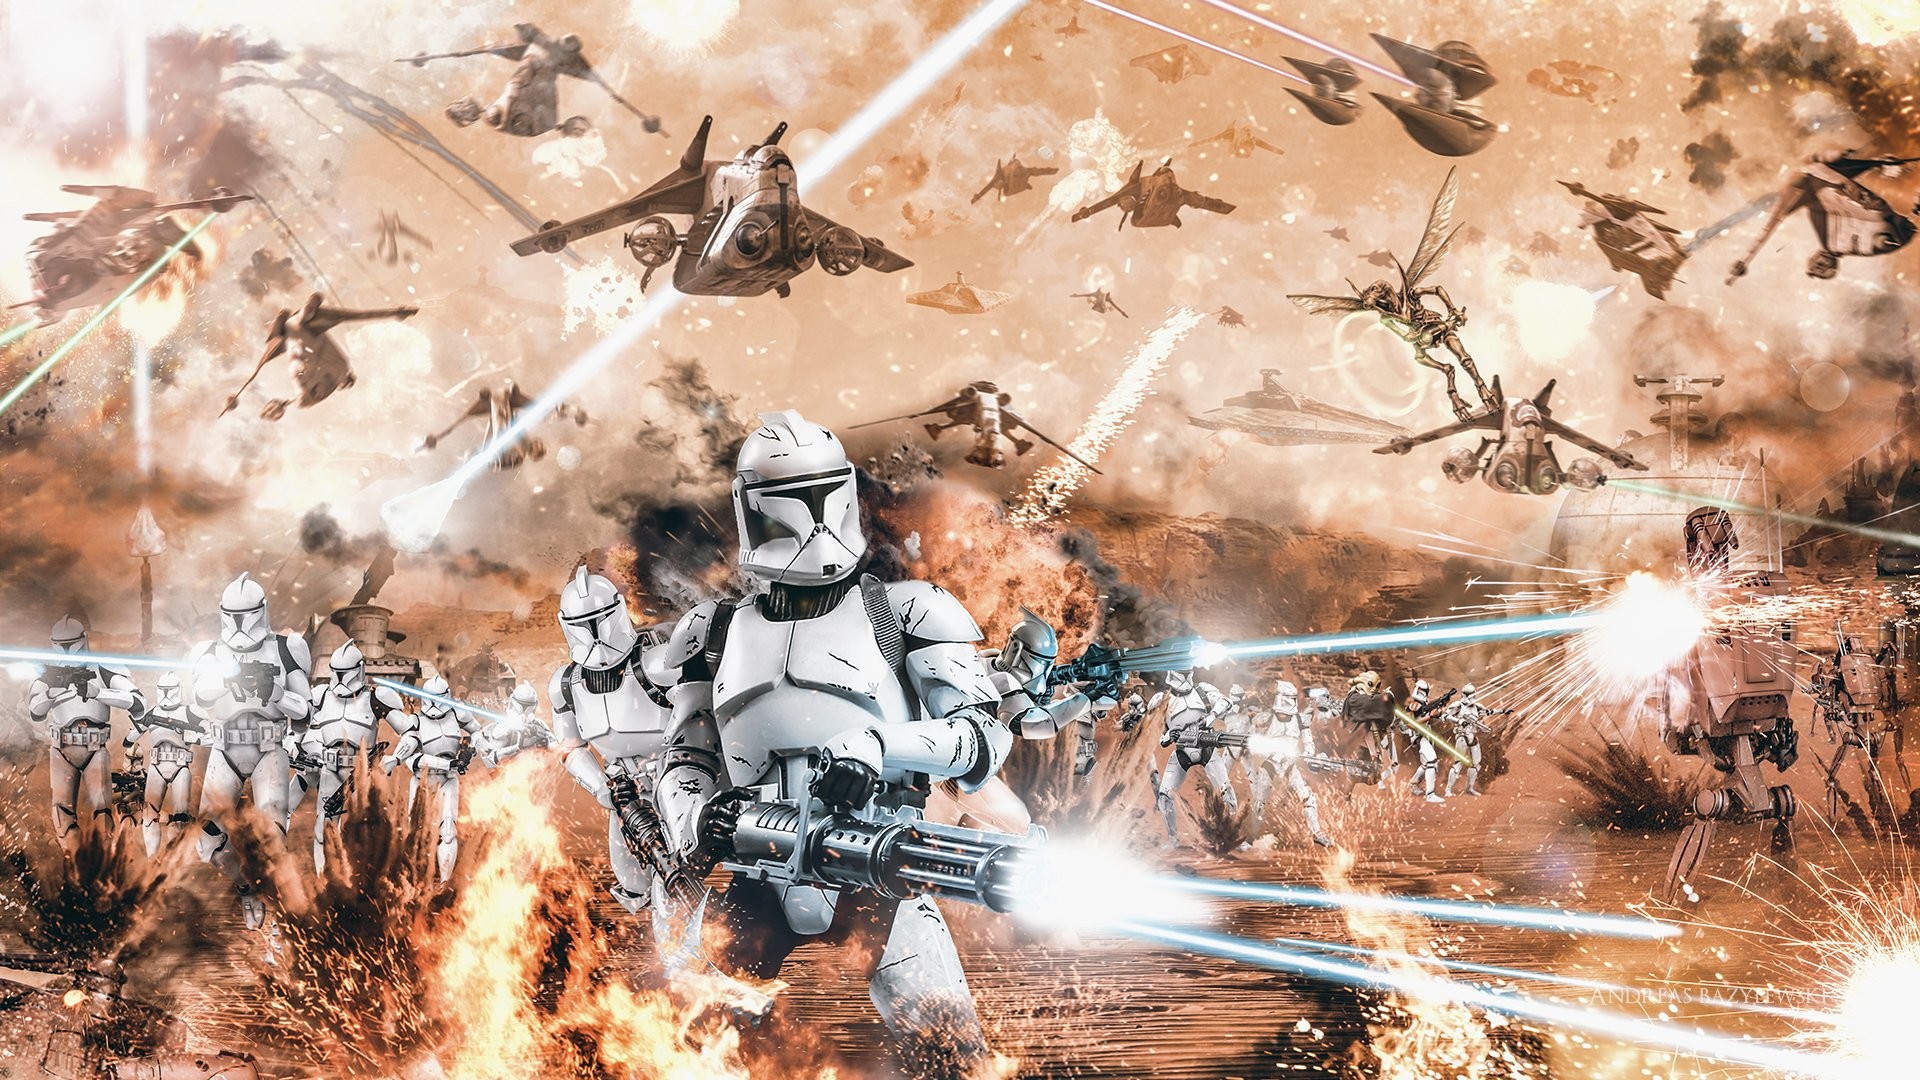 Star Wars Clone Trooper Wallpaper 61 Pictures